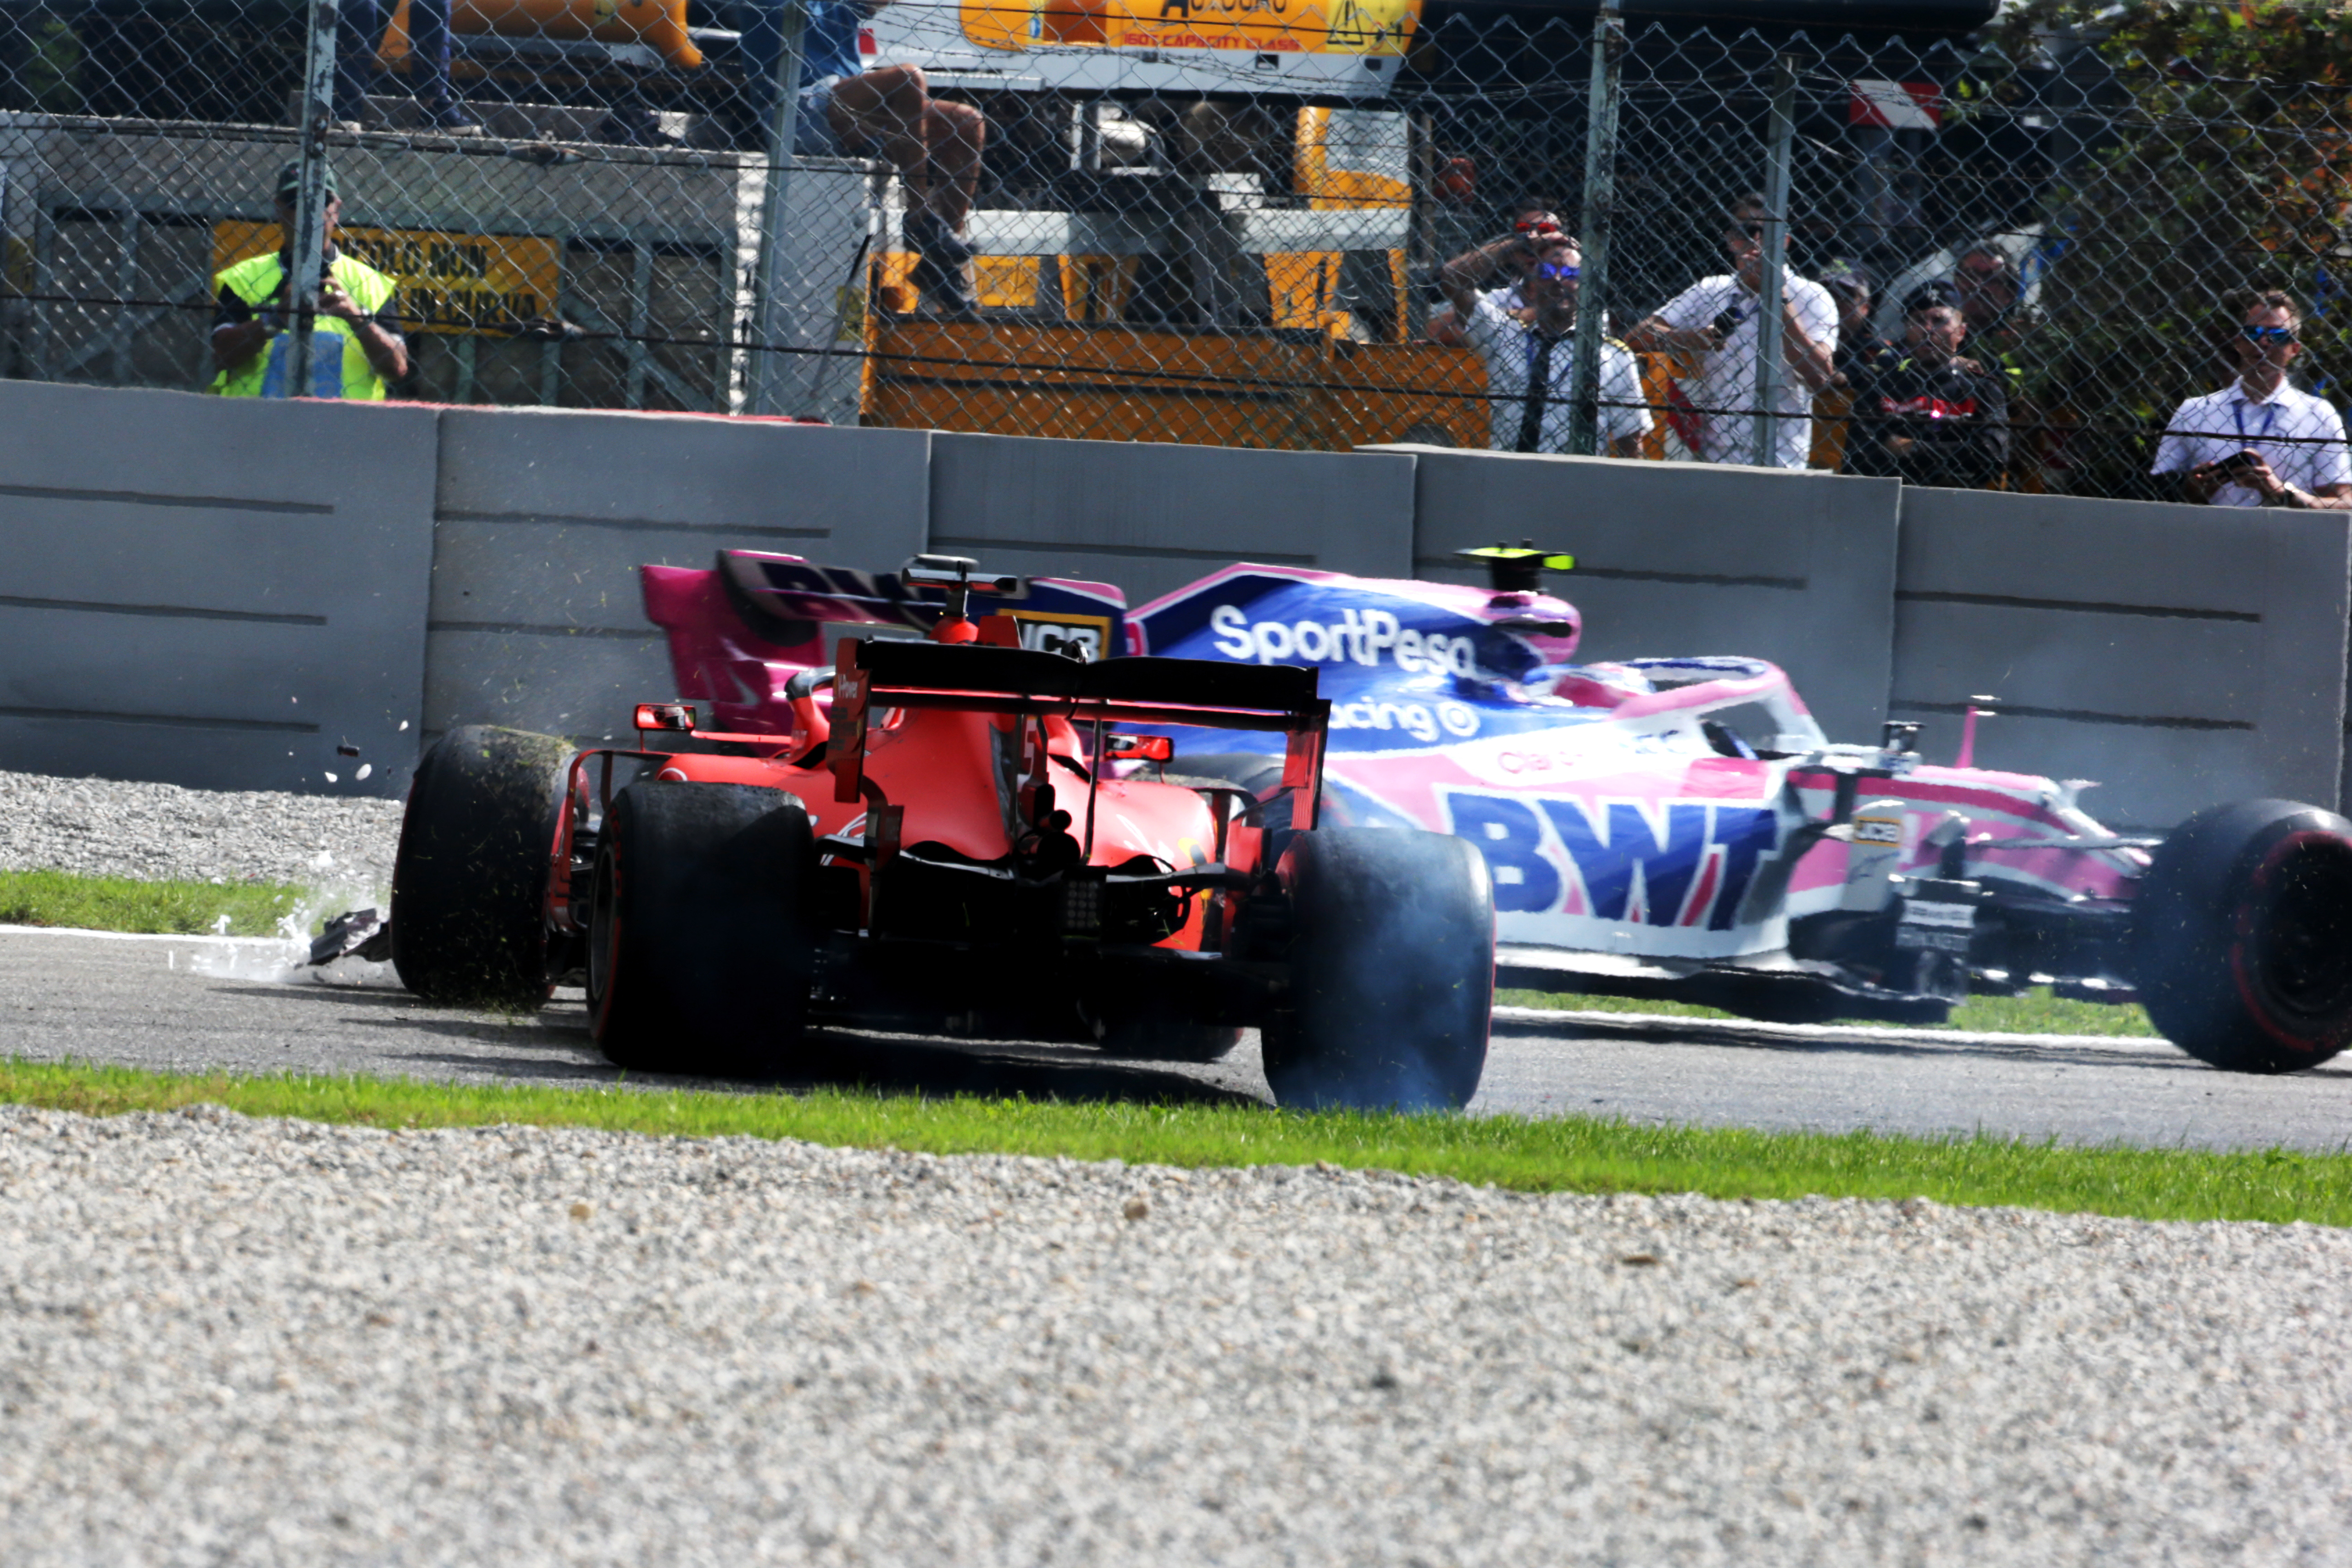 Lance Stroll Sebastian Vettel collision Italian Grand Prix 2019 Monza